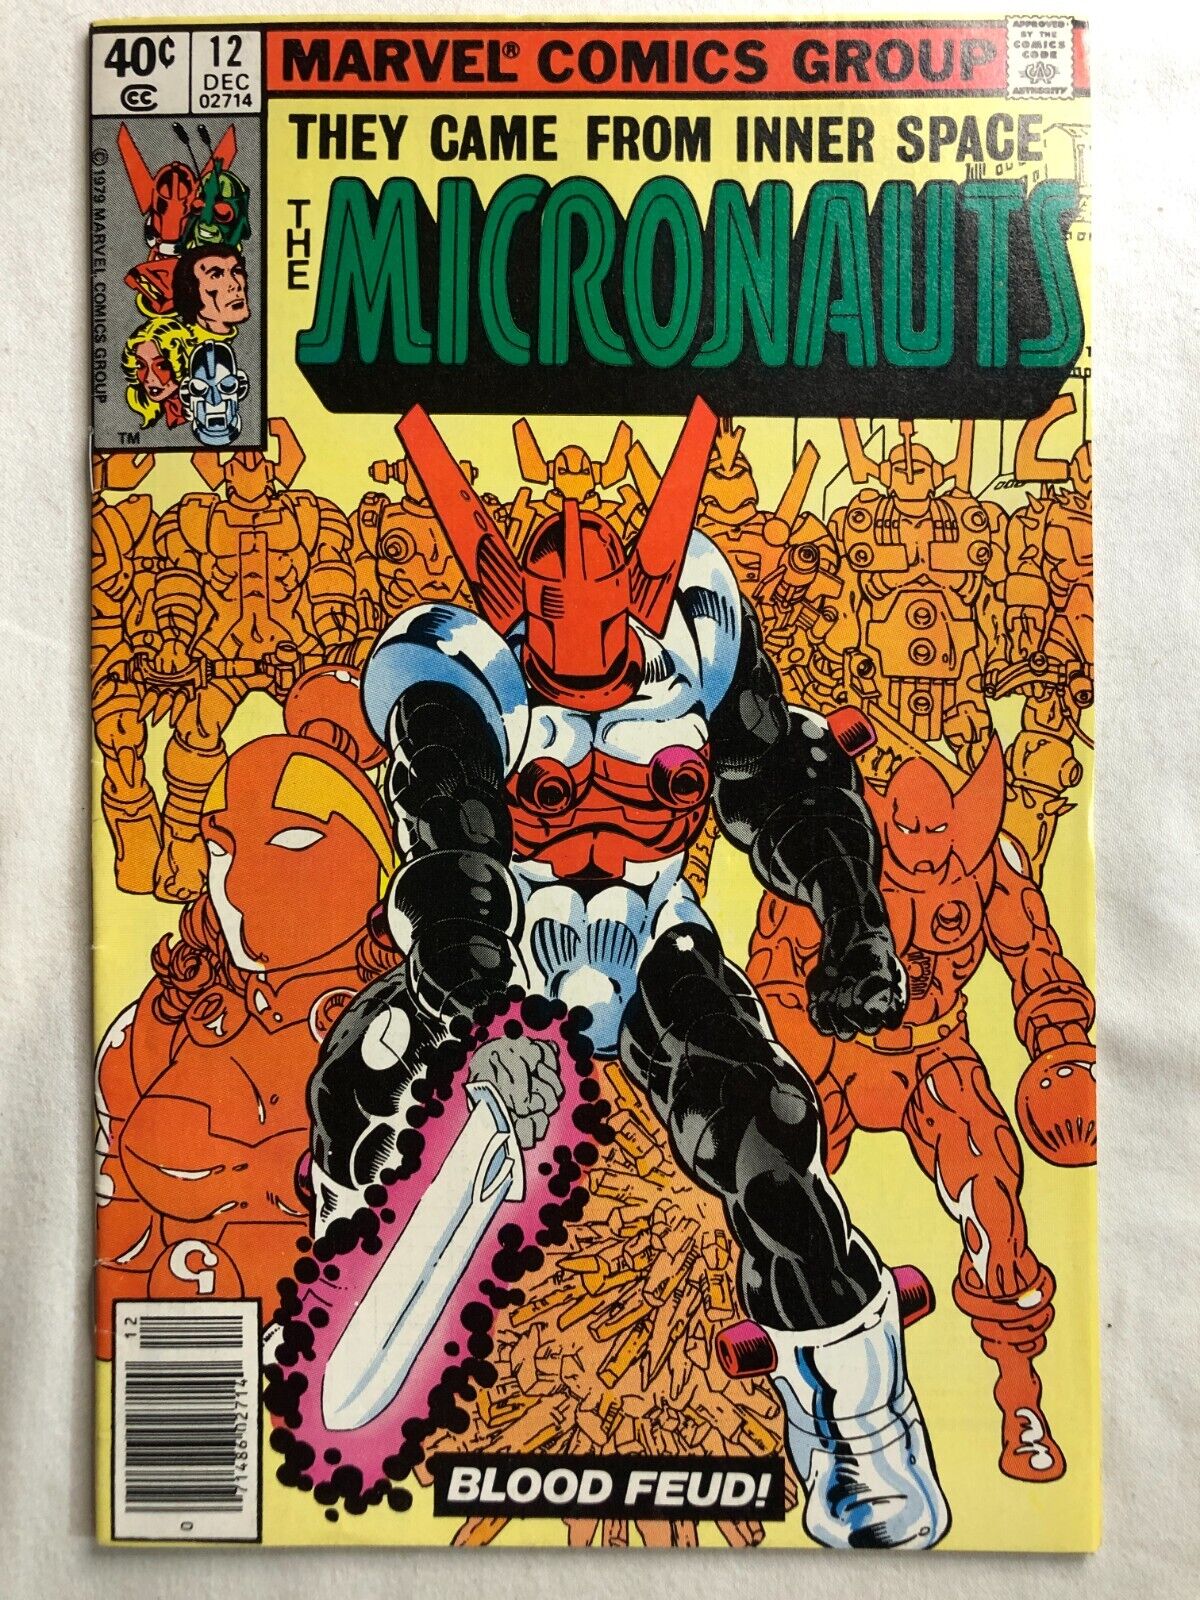 The Micronauts #12 December 1979 Vintage Bronze Age Marvel Comics Collectable